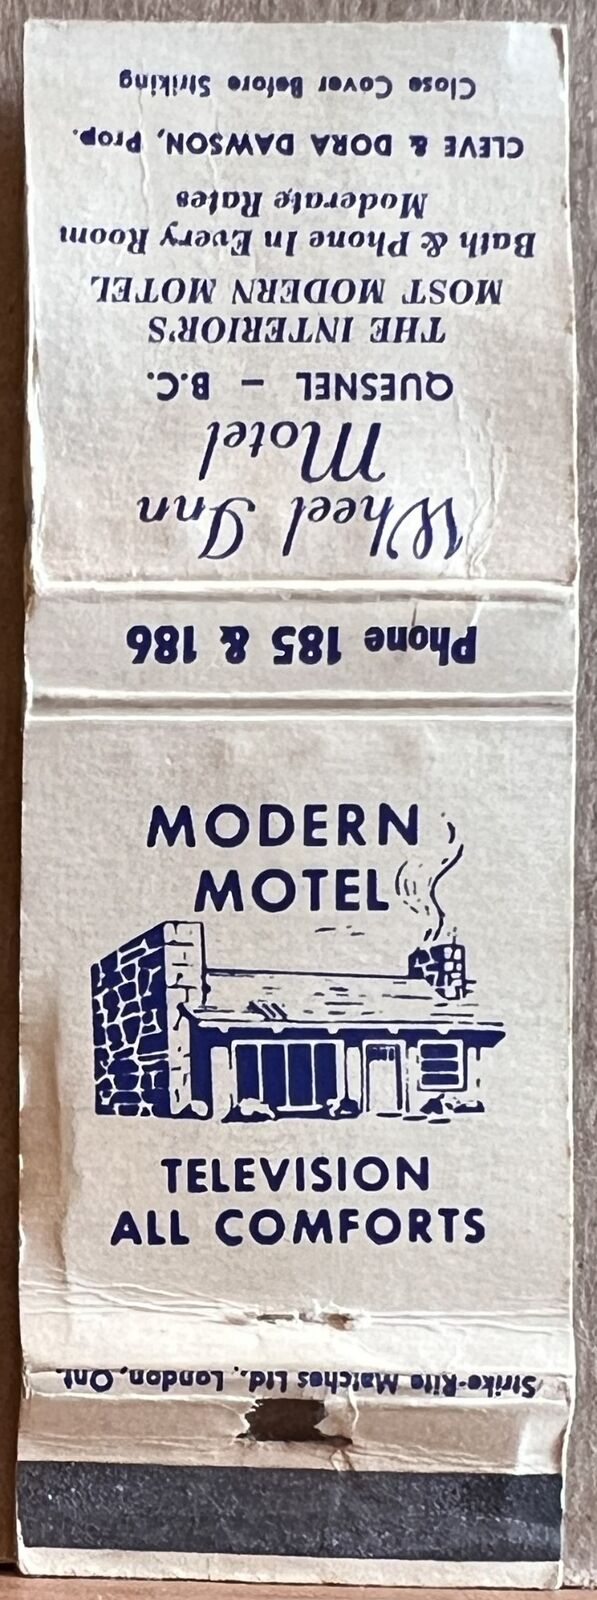 Wheel Inn Motel Quesnel BC British Columbia Canada Vintage Matchbook Cover